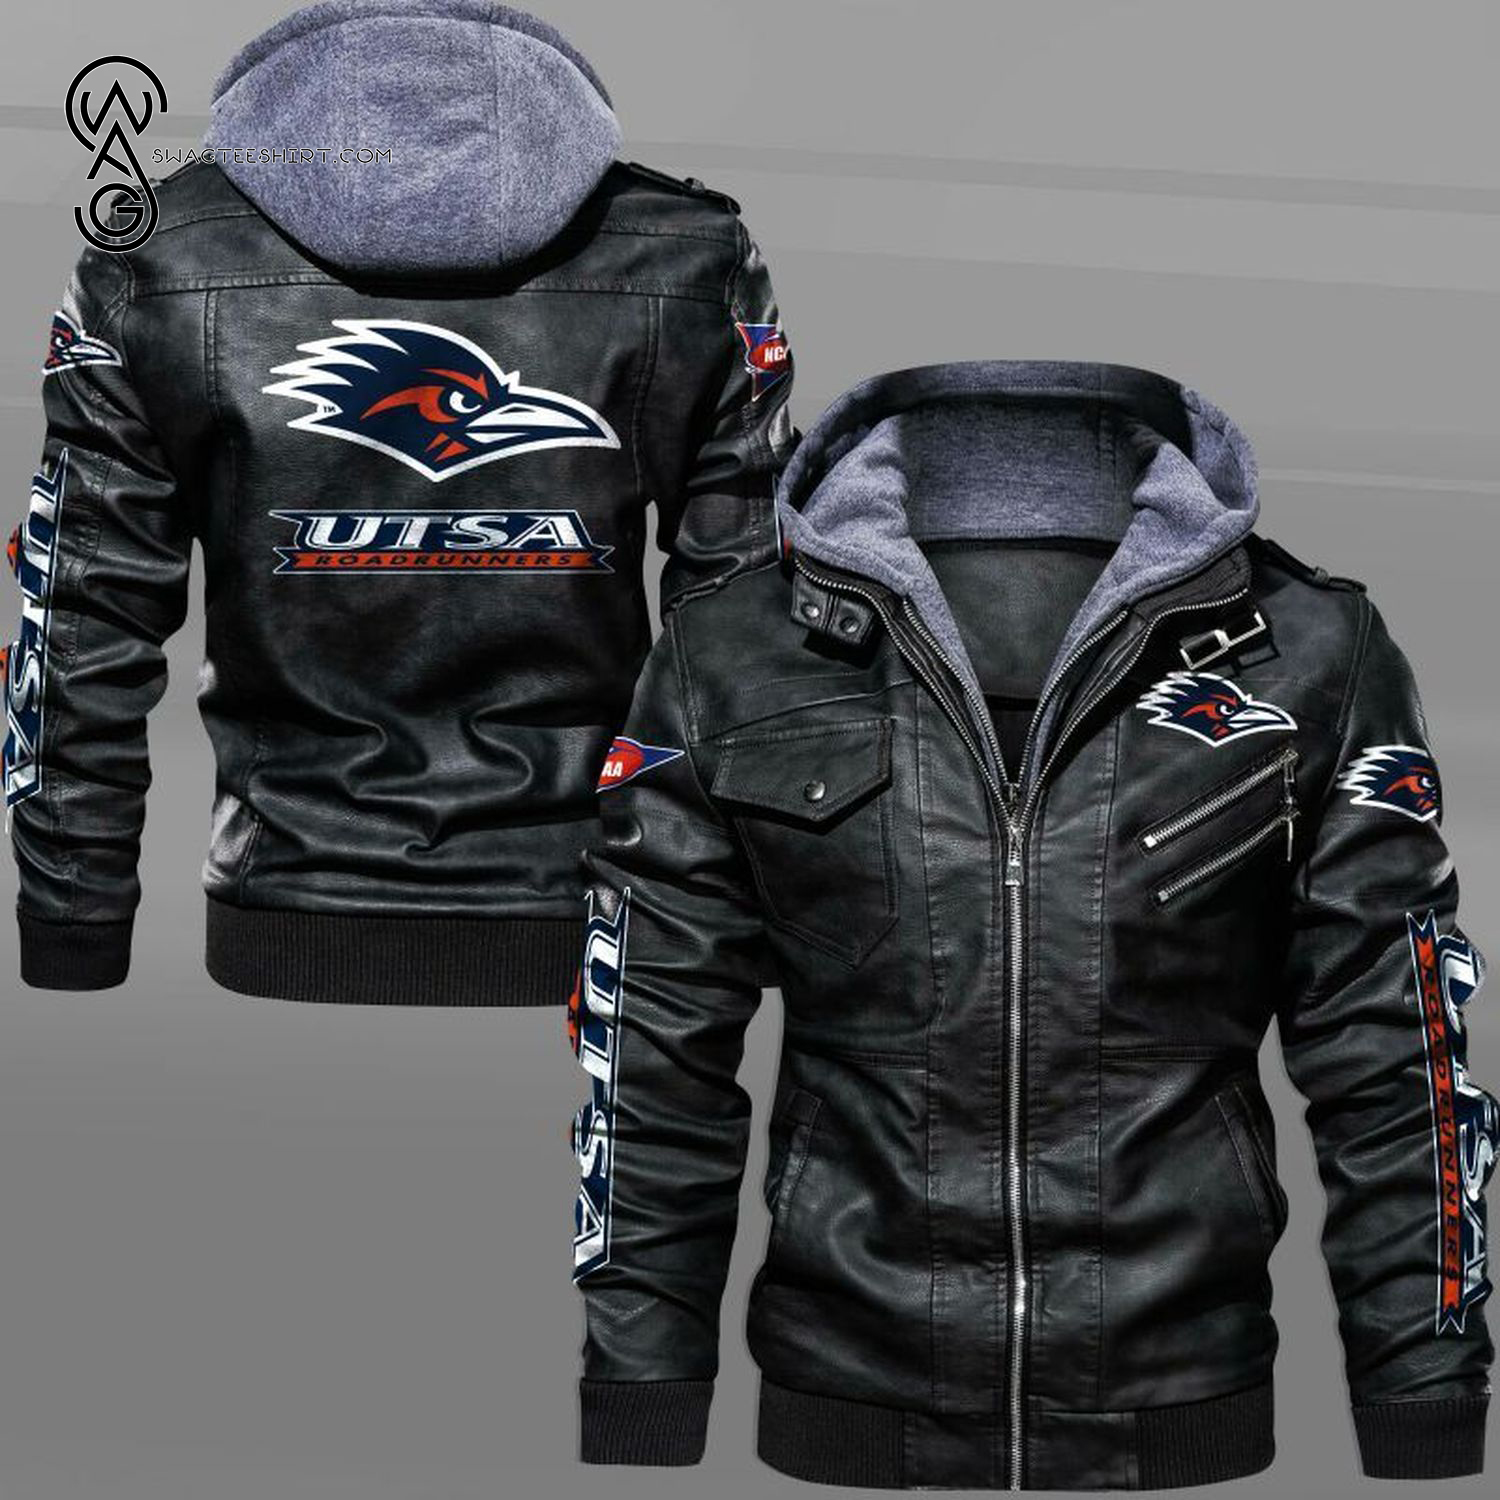 UTSA Roadrunners Sport Team Leather Jacket